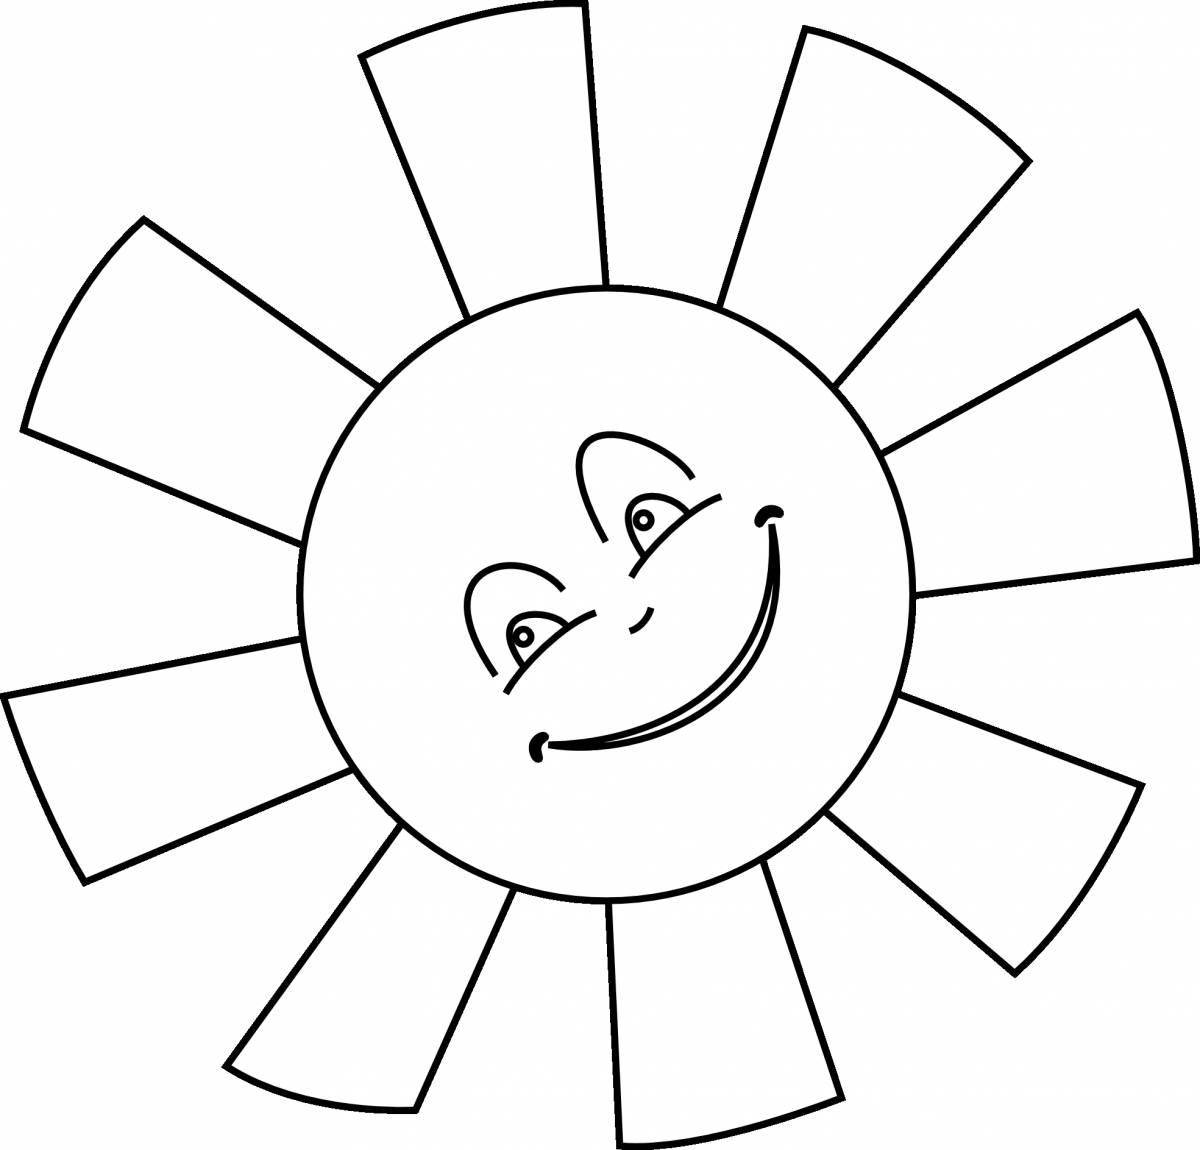 Блестящая раскраска солнце для детей